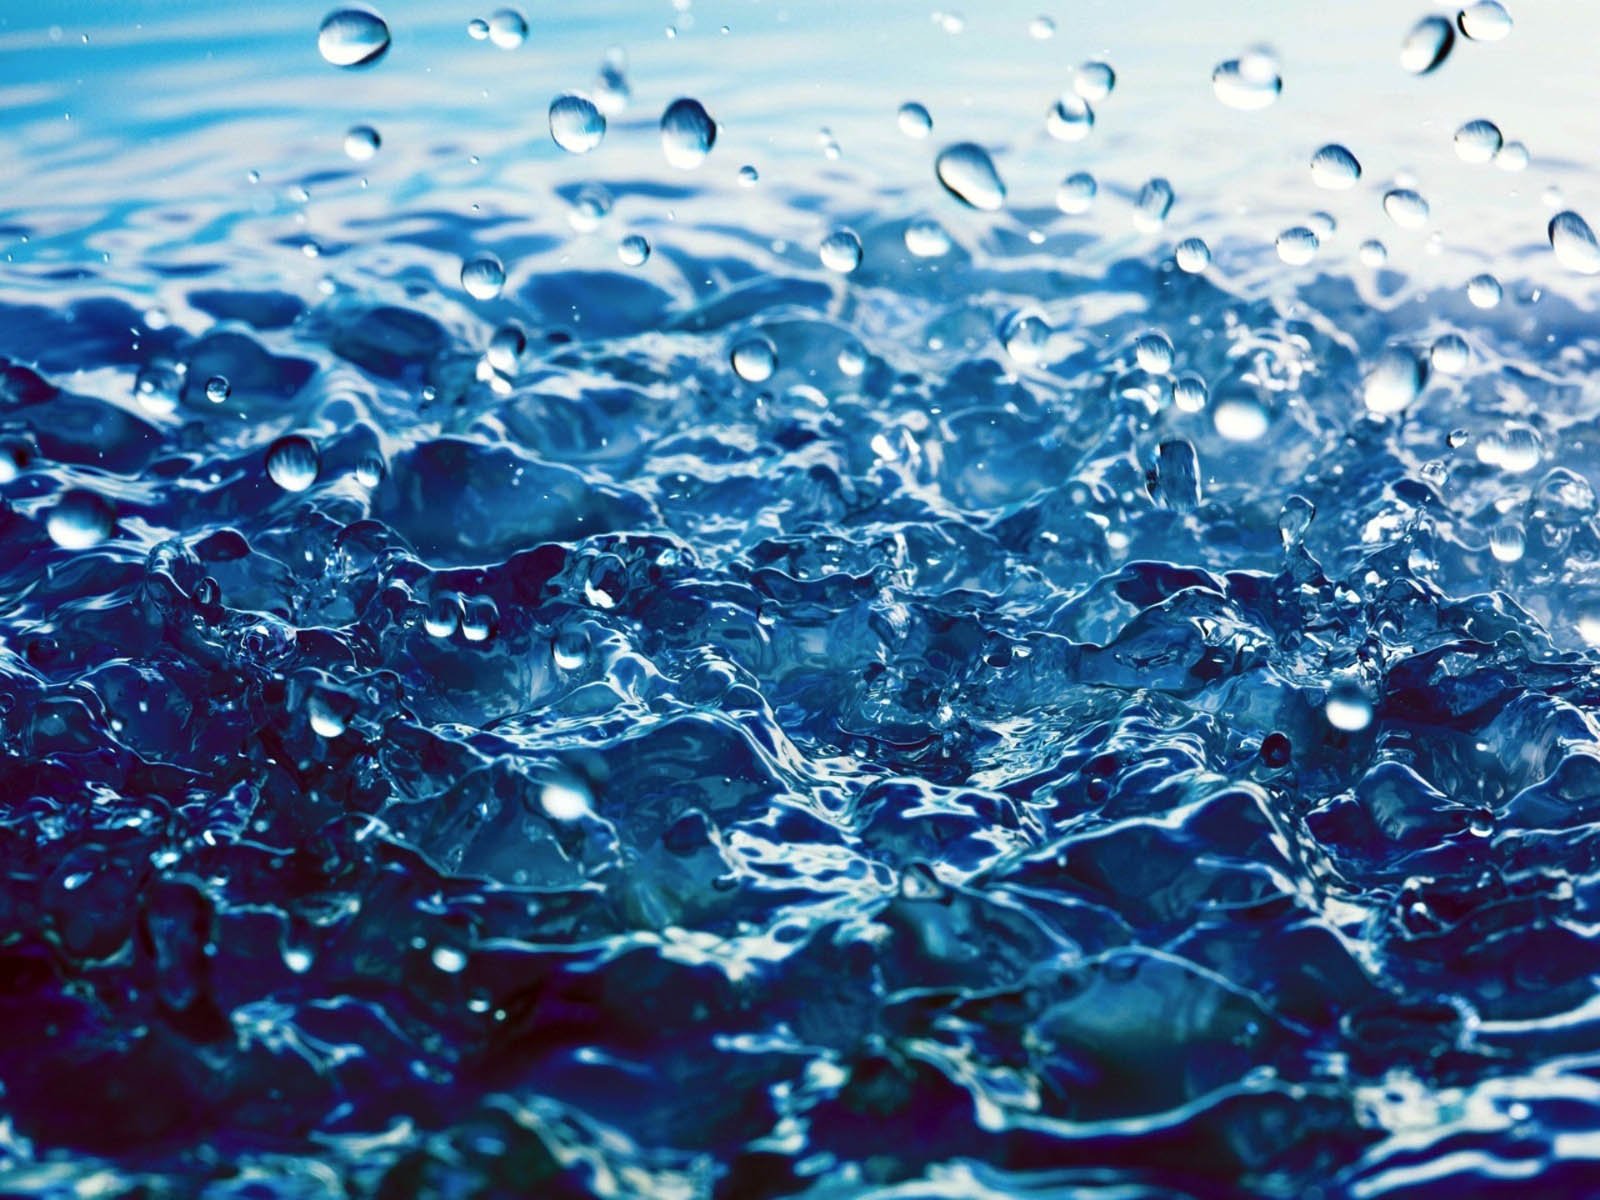  water desktop wallpapers crystal blue water desktop backgrounds images